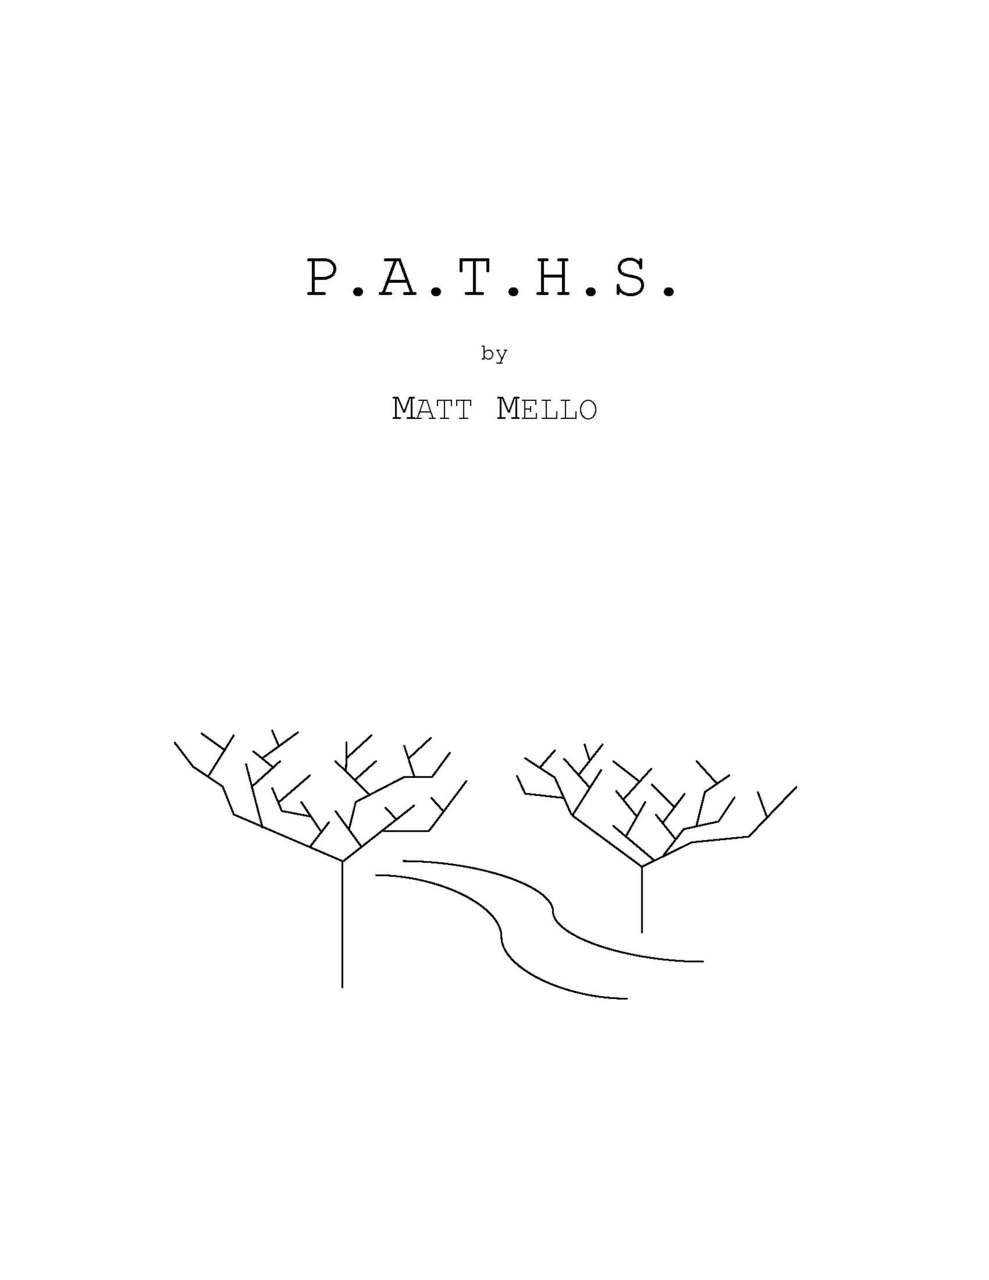 P.A.T.H.S. by Matt Mello (Instant Download)